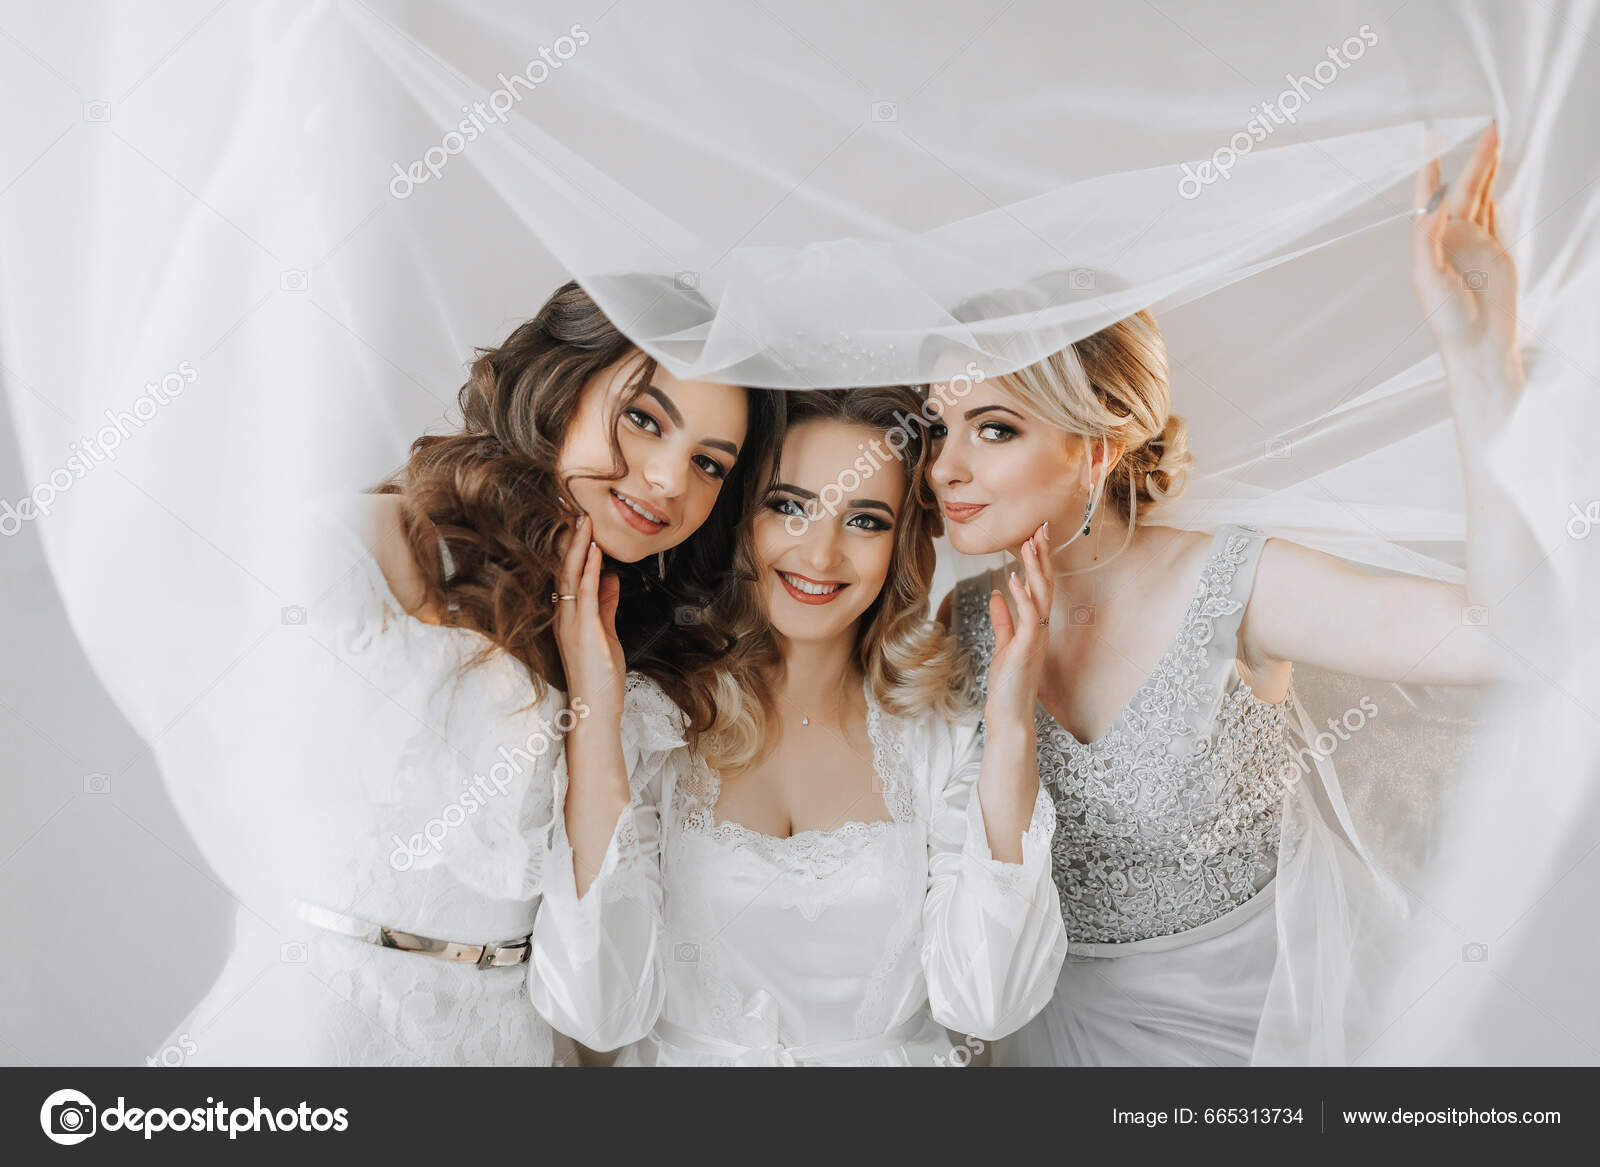 https://st5.depositphotos.com/77483880/66531/i/1600/depositphotos_665313734-stock-photo-bridesmaids-looking-camera-all-bride.jpg